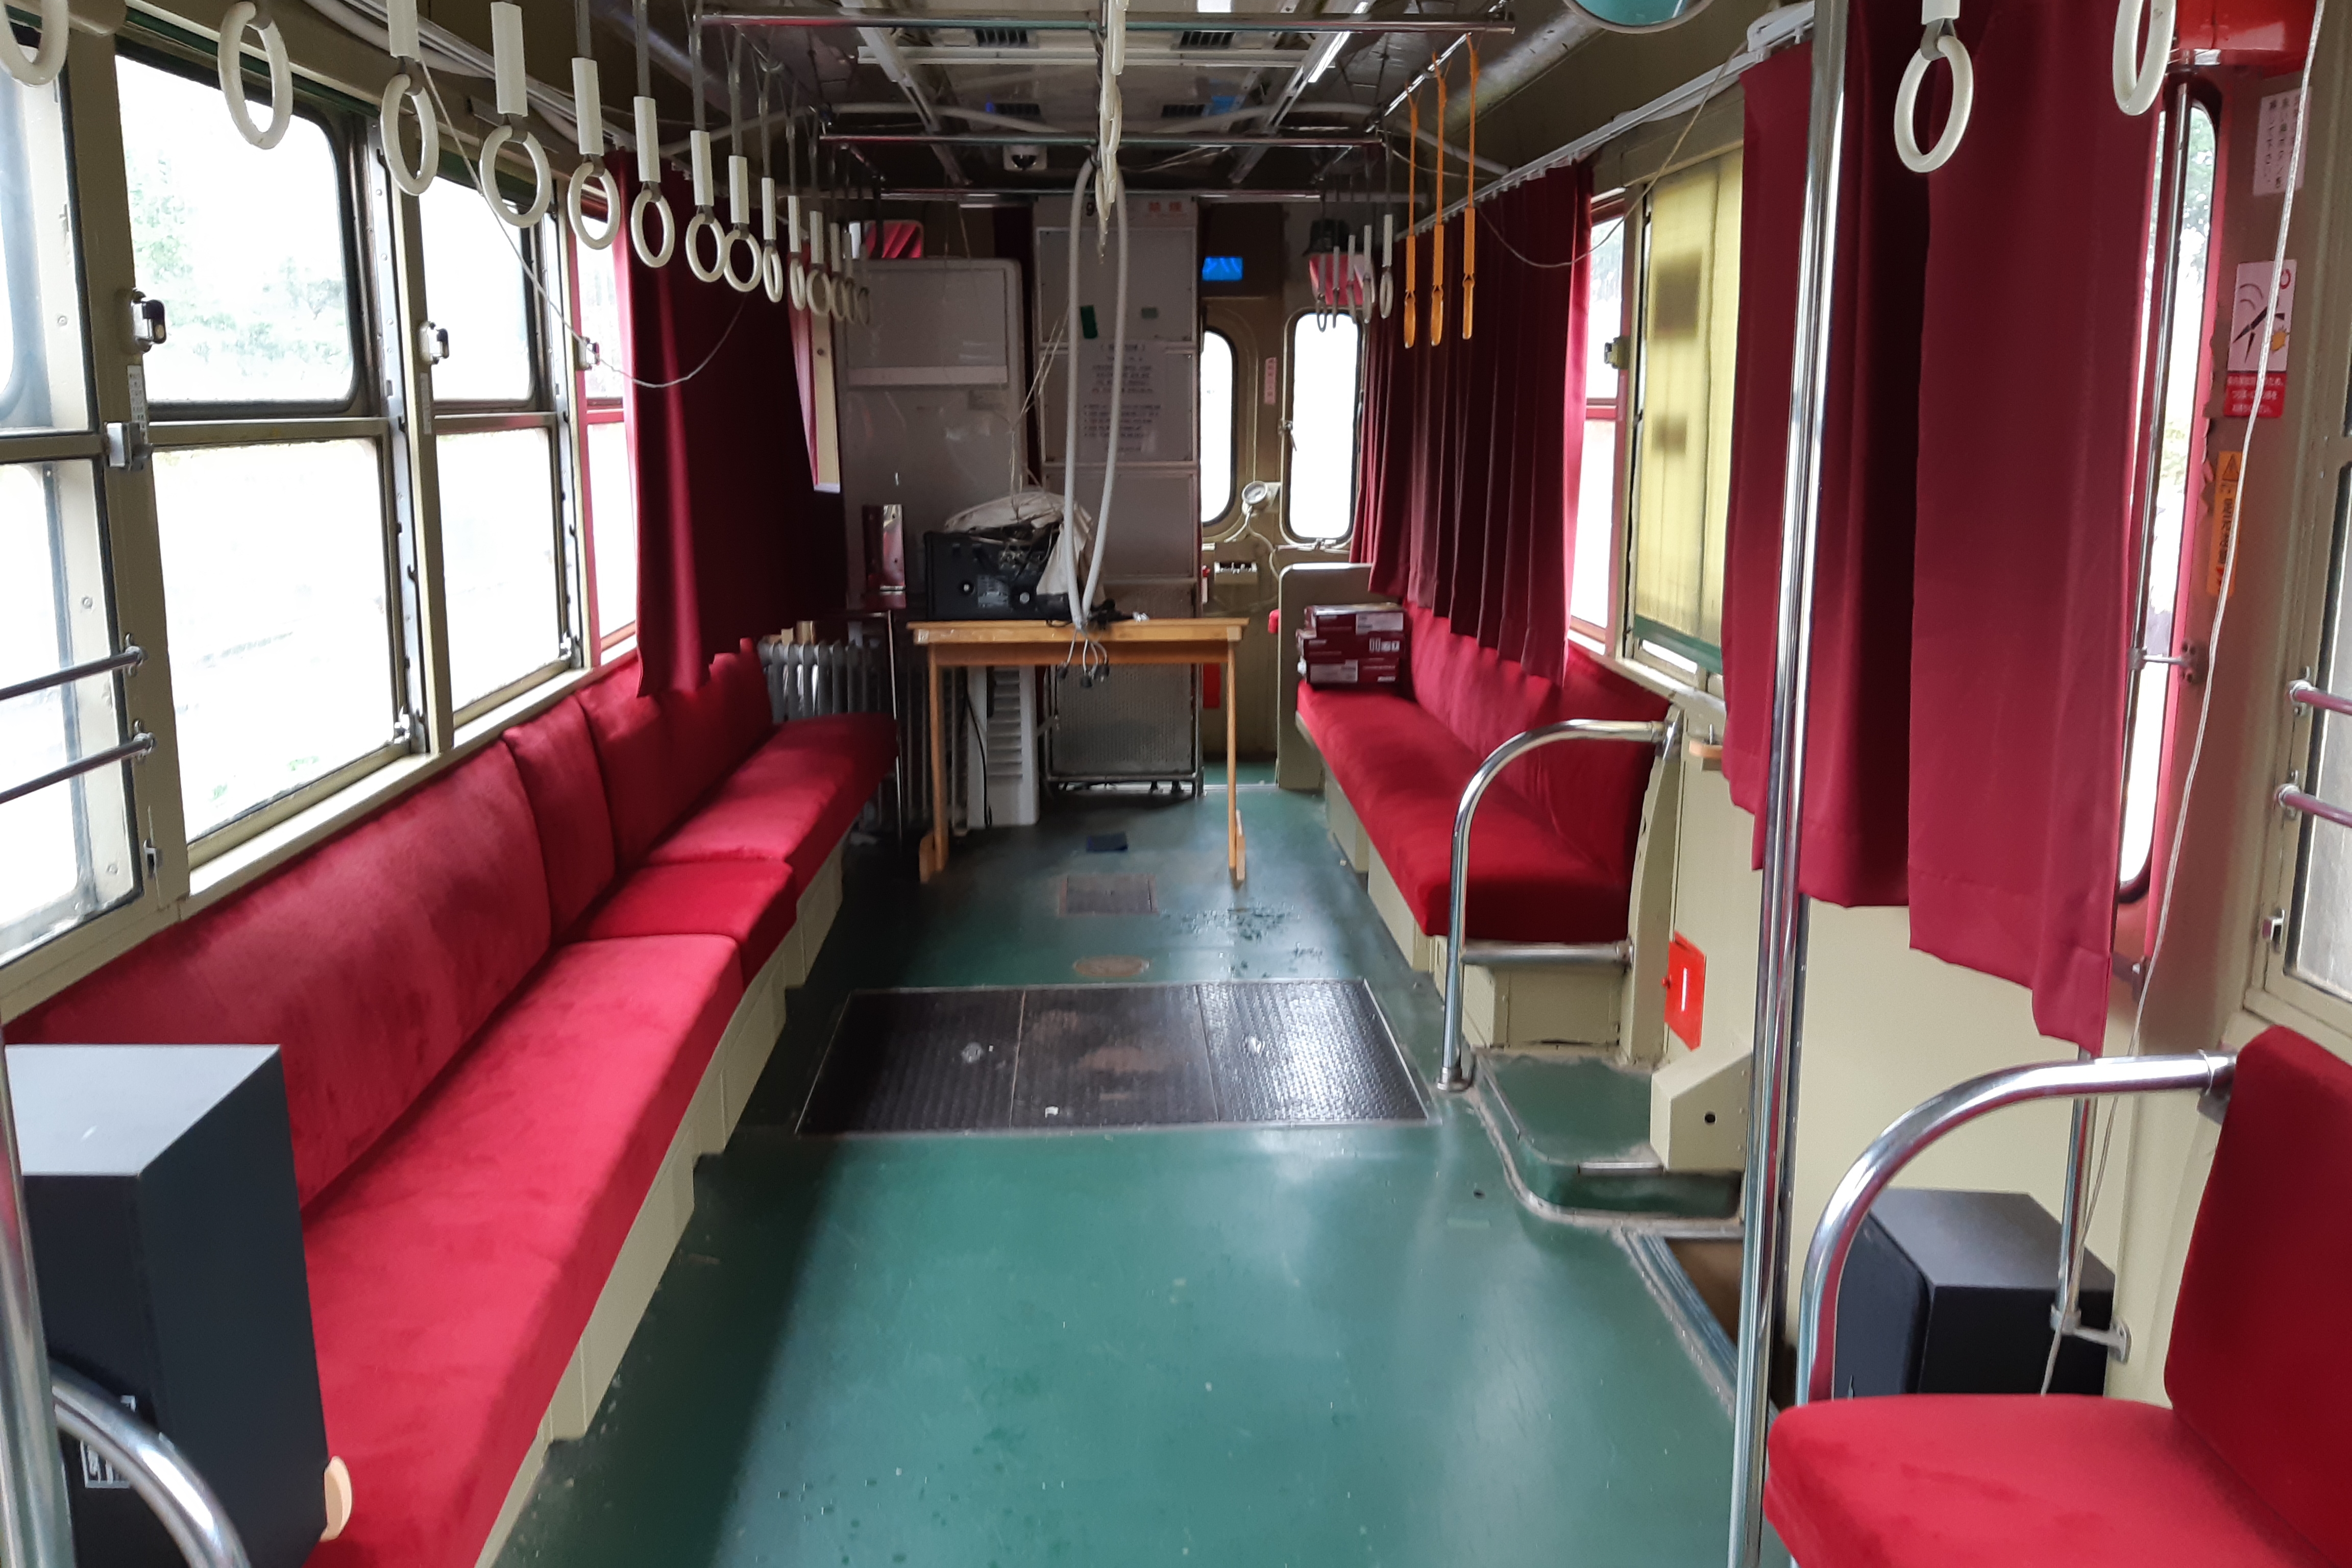 Hwarangdae Railroad Park2 : Exhibition facilities reenacting the interior space of an old train